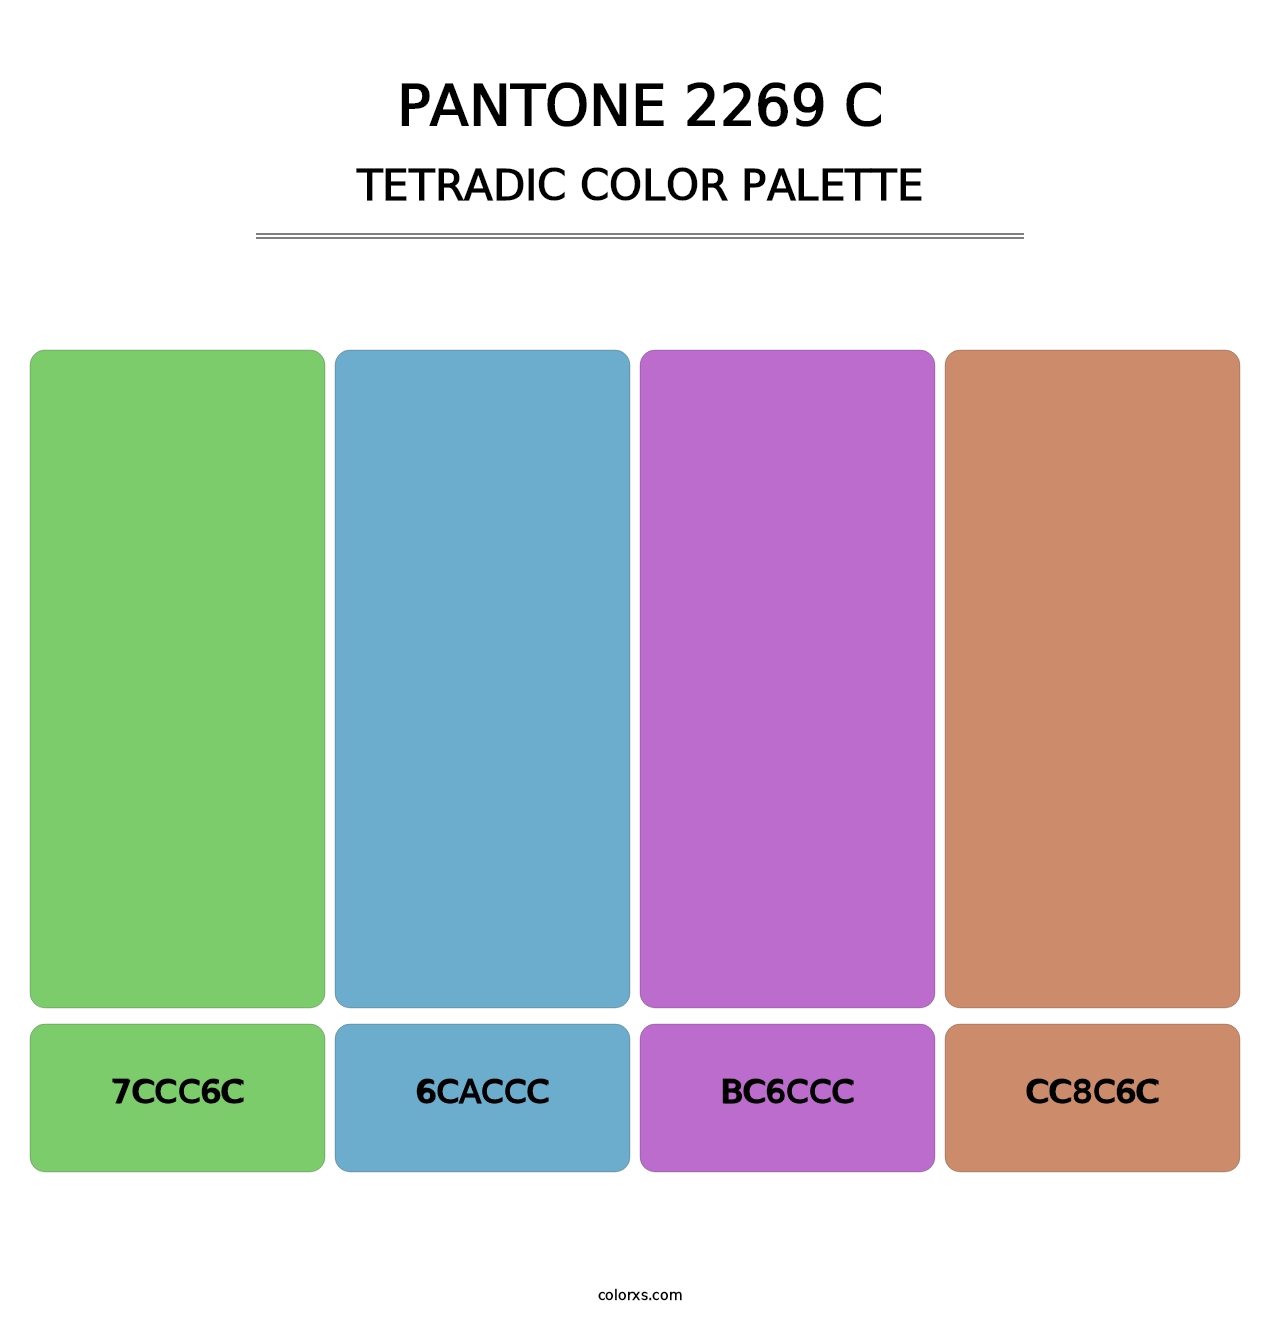 PANTONE 2269 C - Tetradic Color Palette